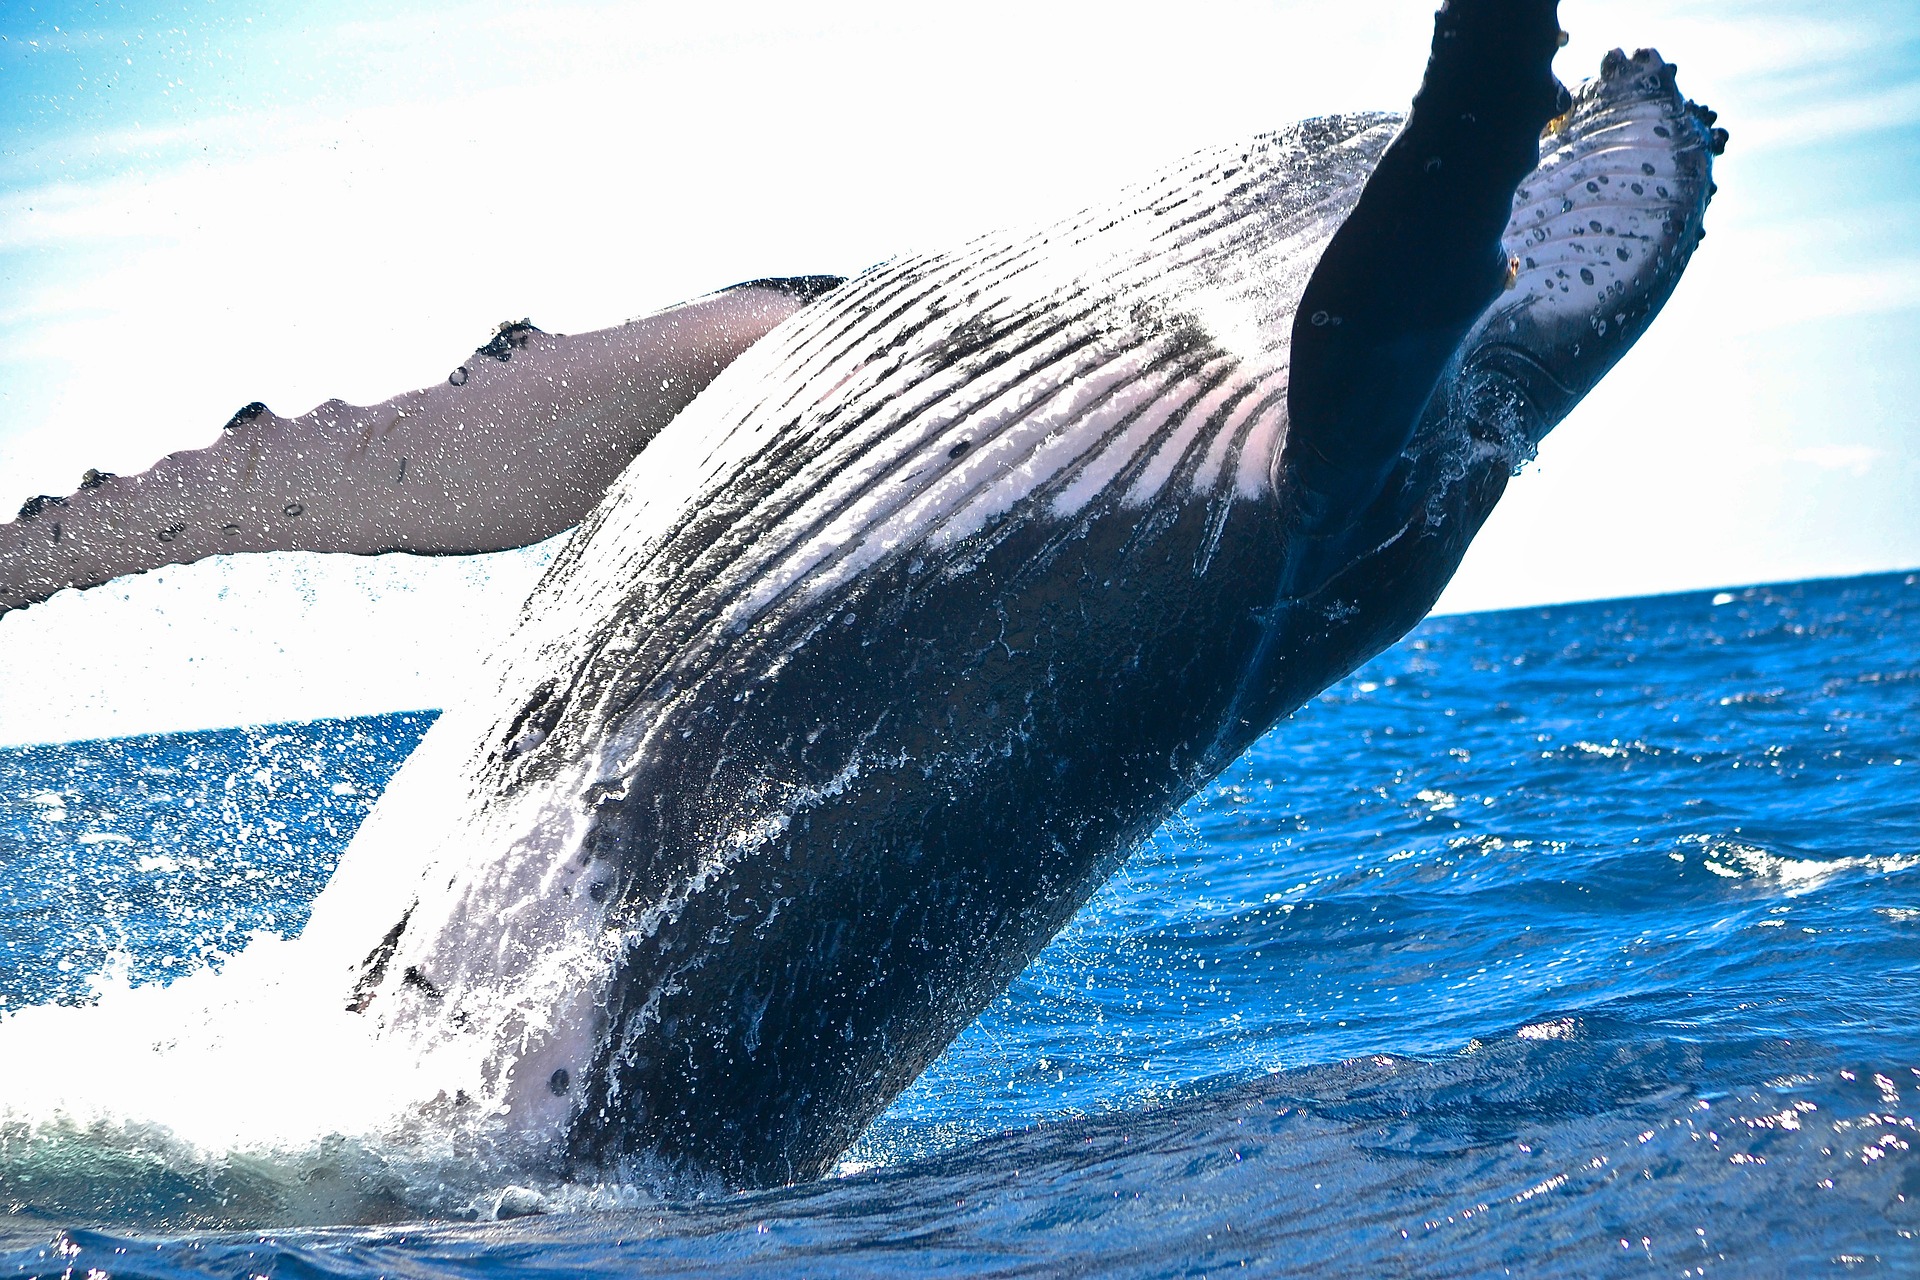 La imagen muestra una ballena.